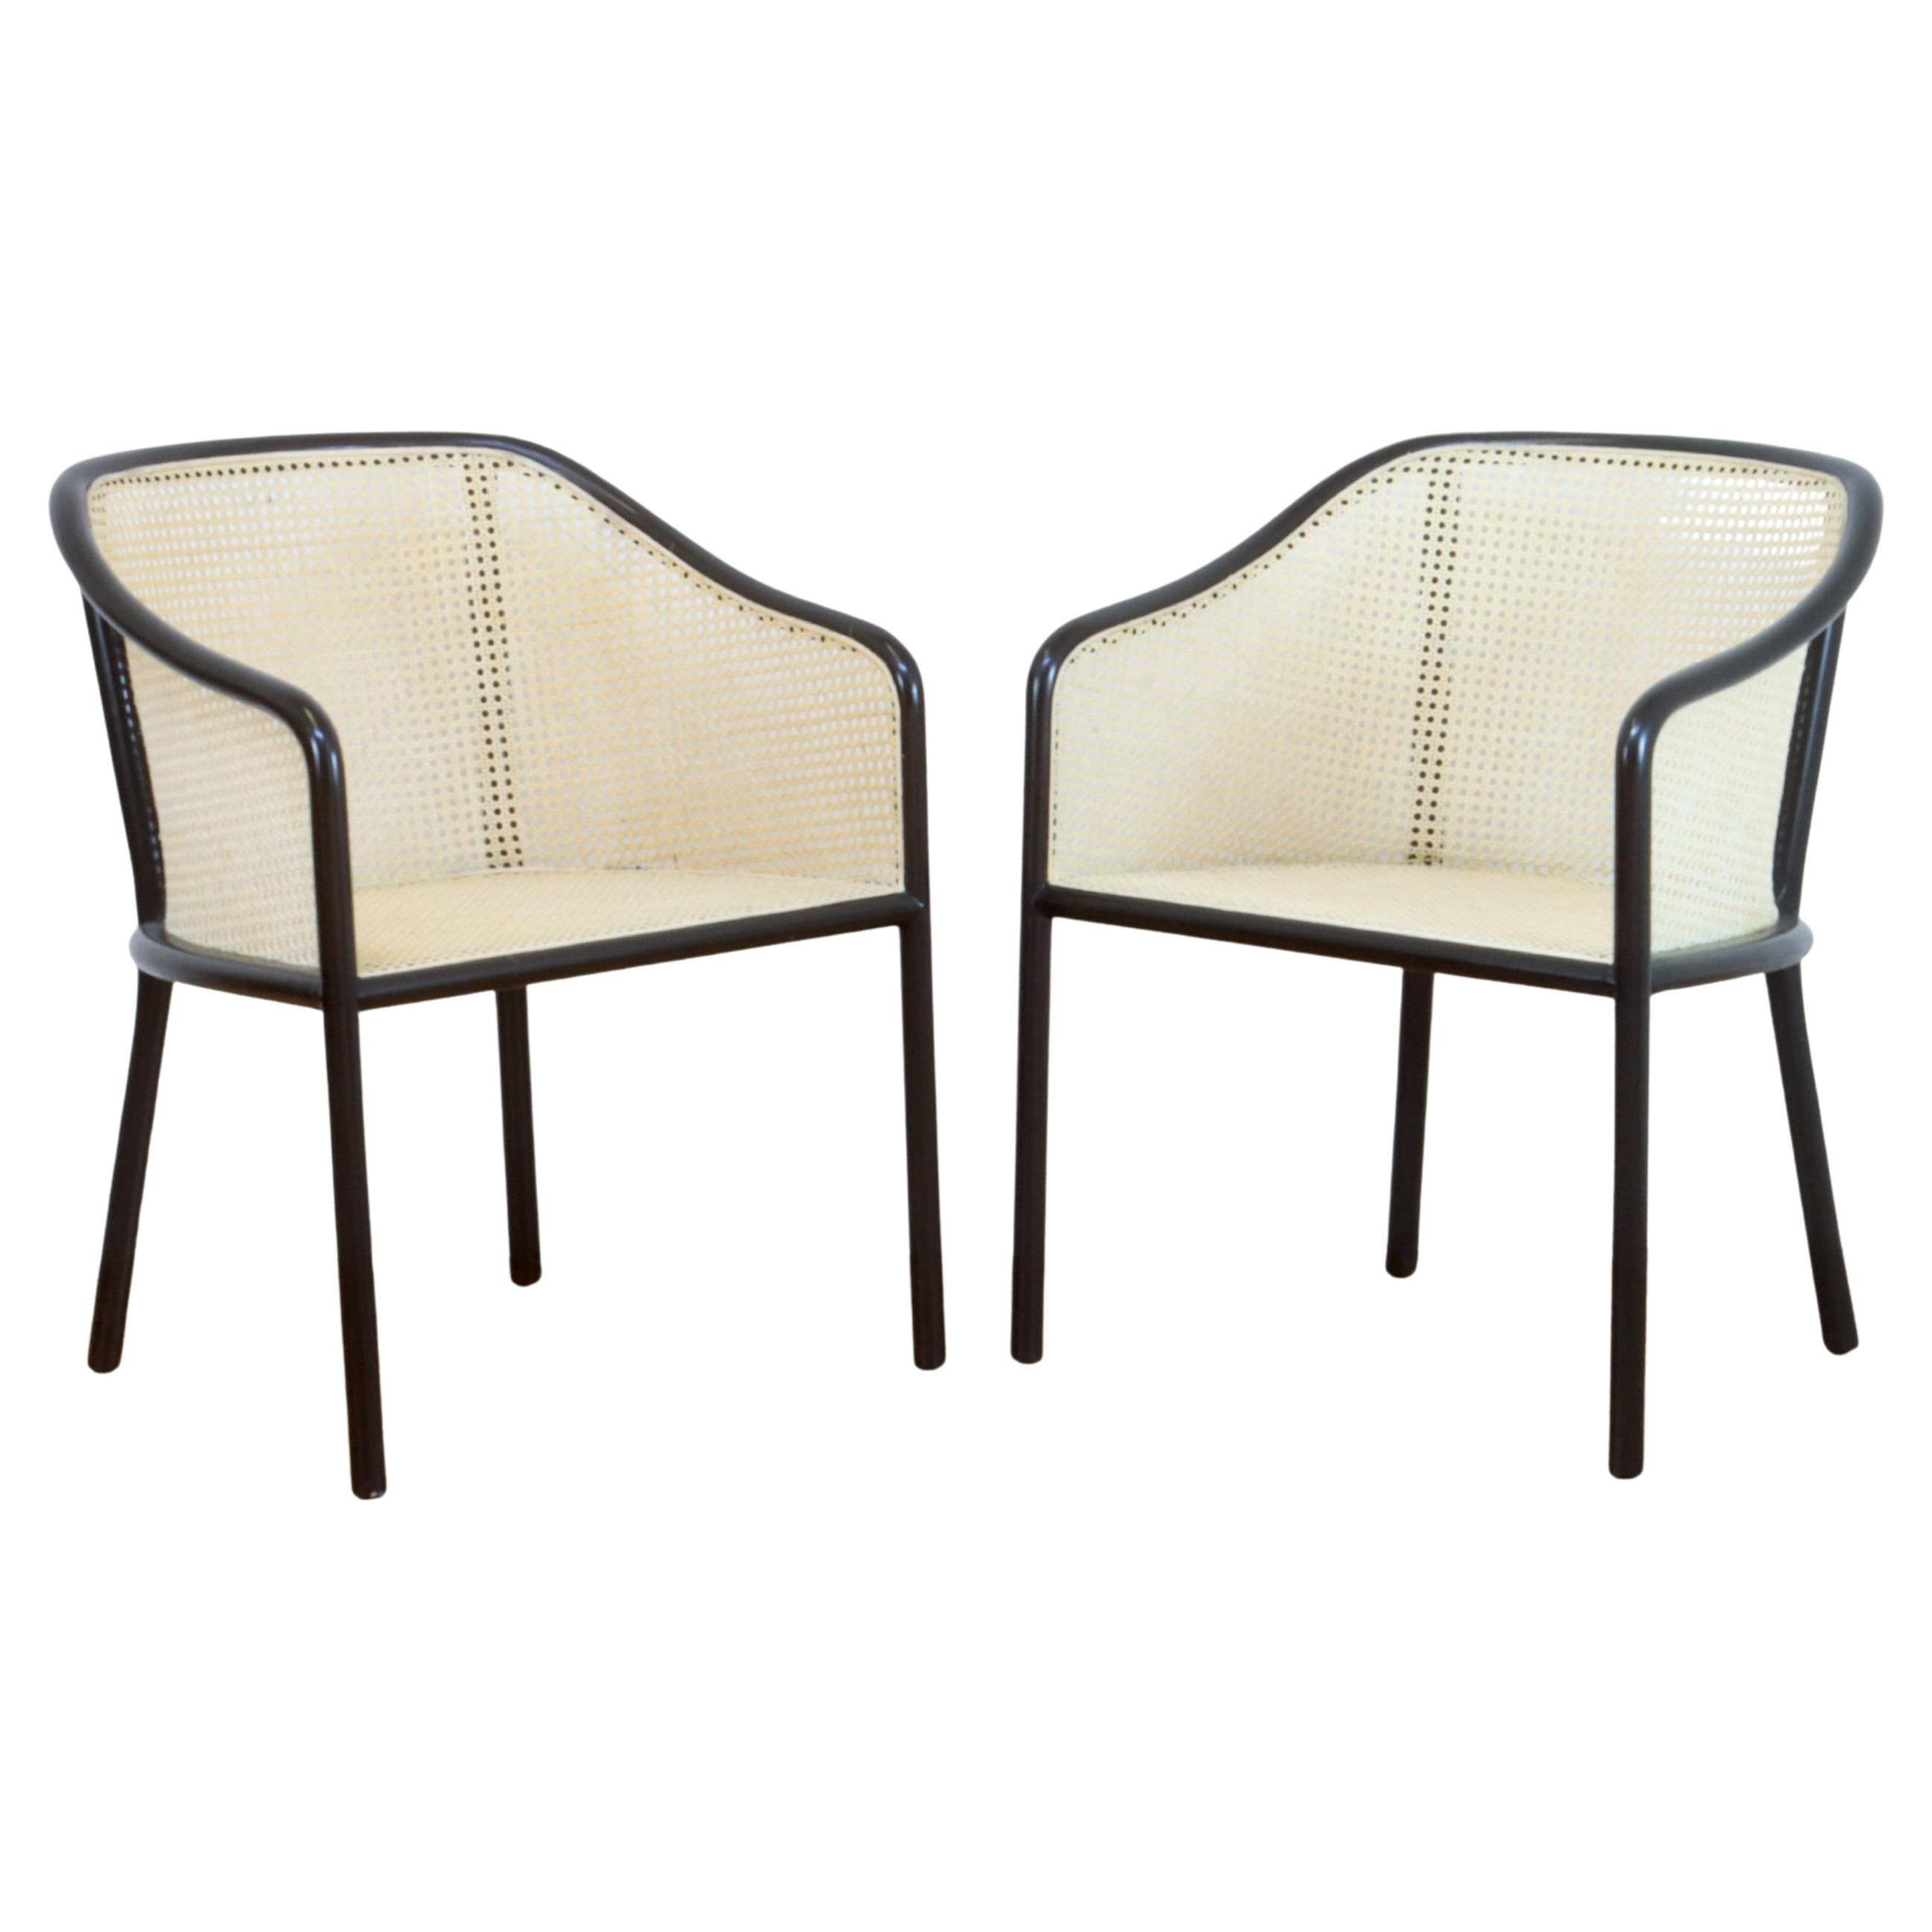 Pair of Ward Bennett "Landmark" Lounge Chairs For Sale